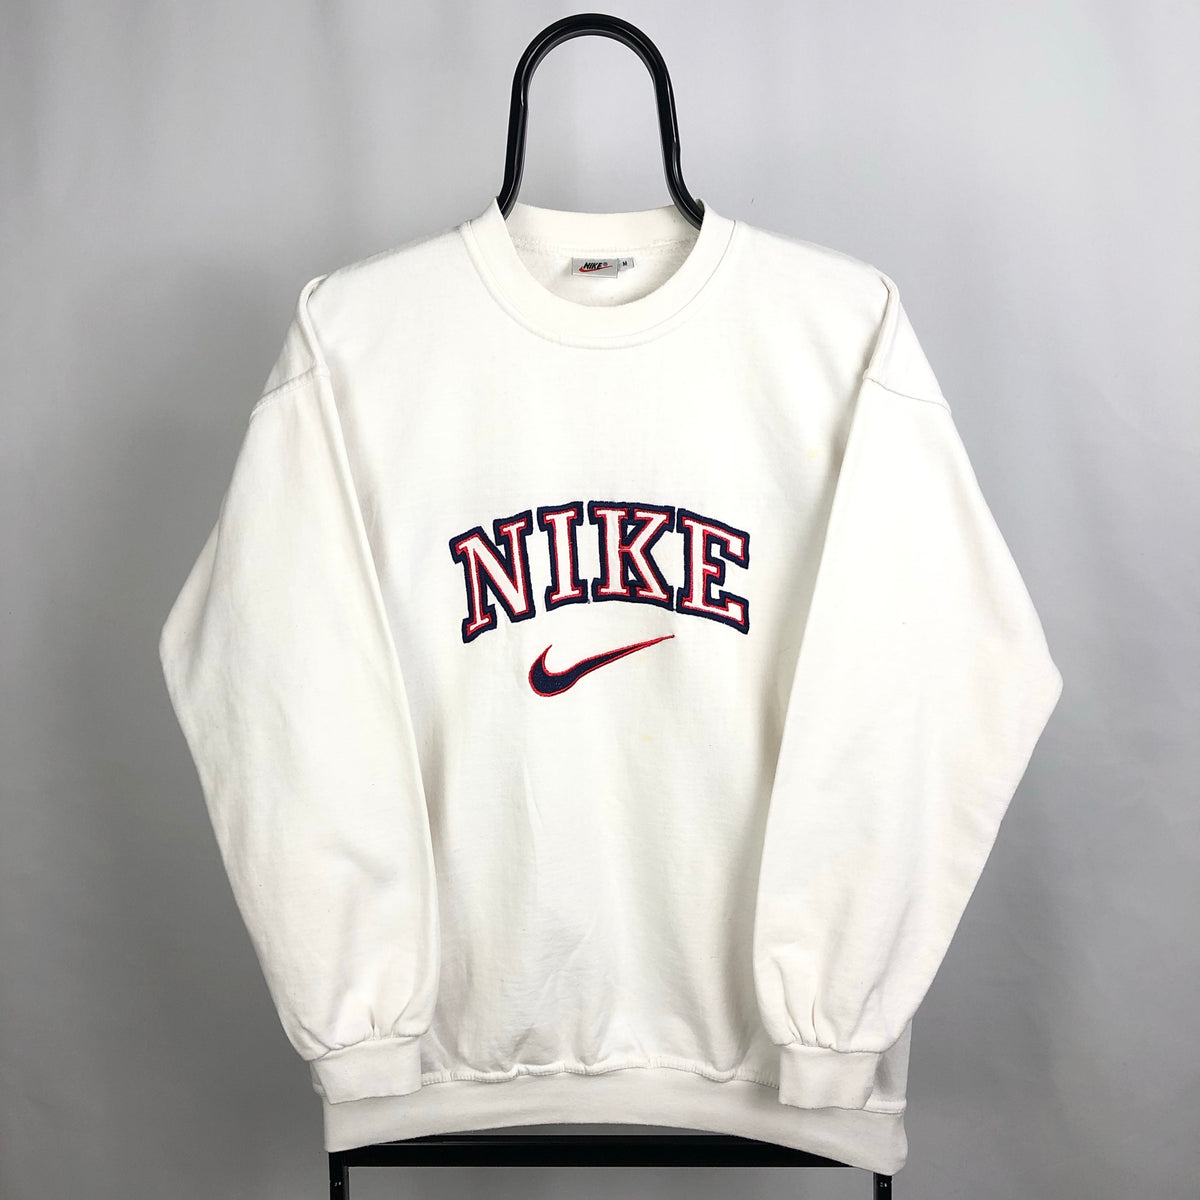 Vintage 90s Nike Spellout Sweatshirt in White - Men's Small/Women's Me